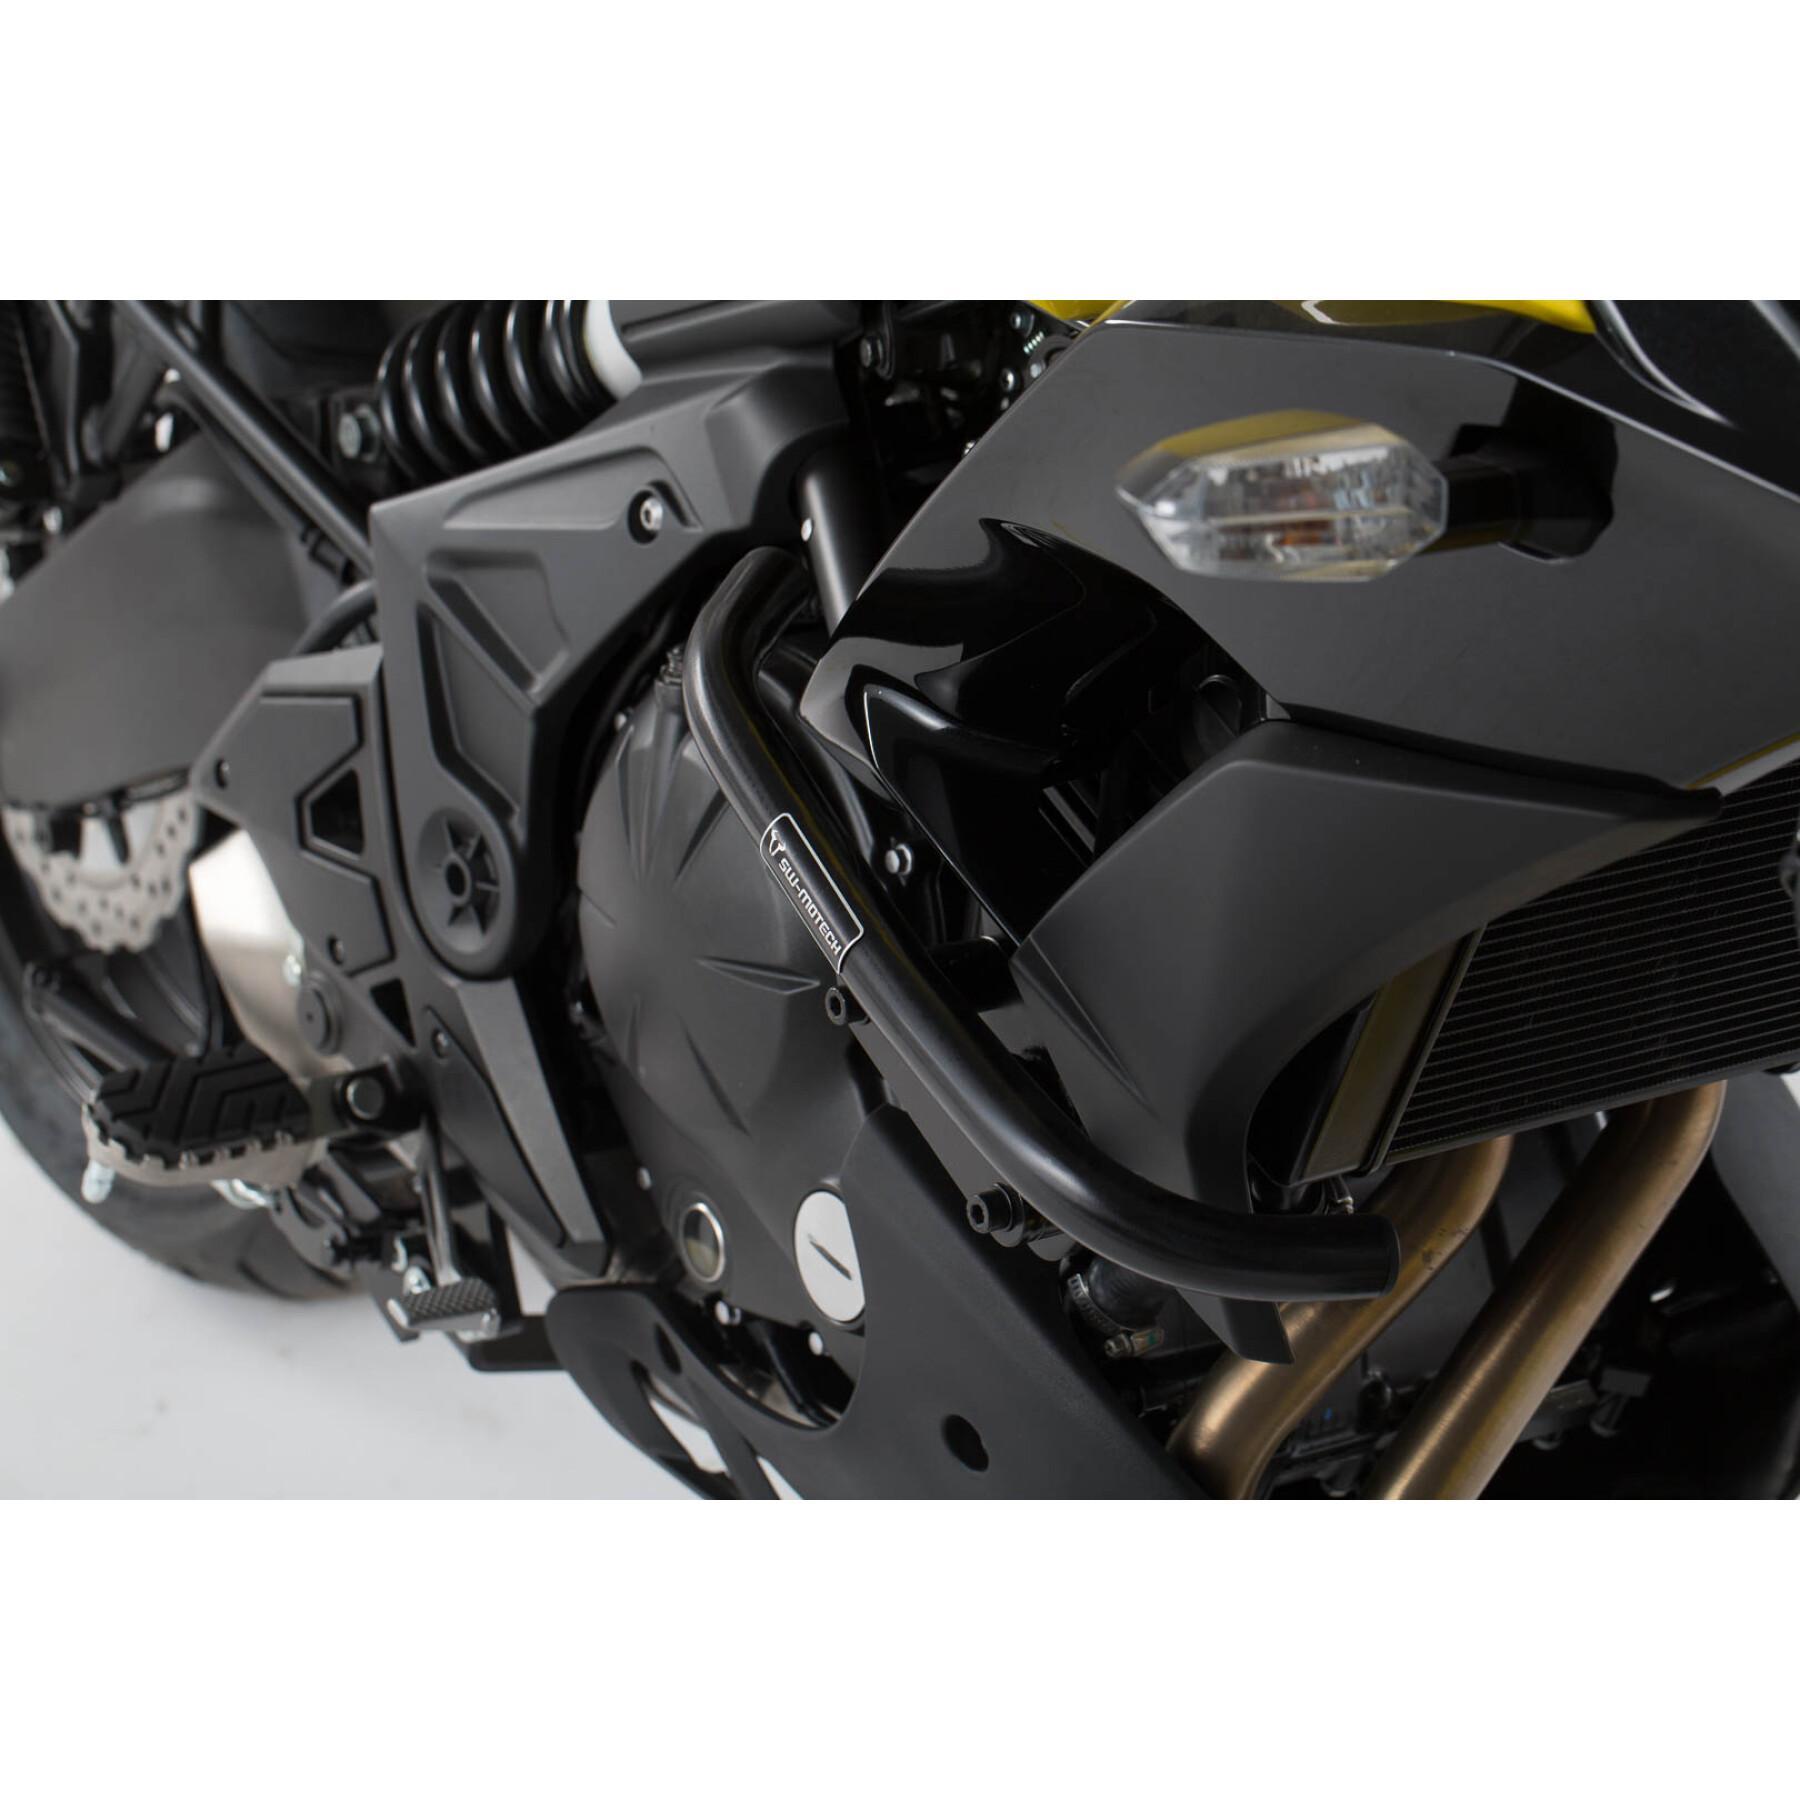 Motorrad-Standartenschutz Sw-Motech Crashbar Kawasaki Versys 650 (15-)